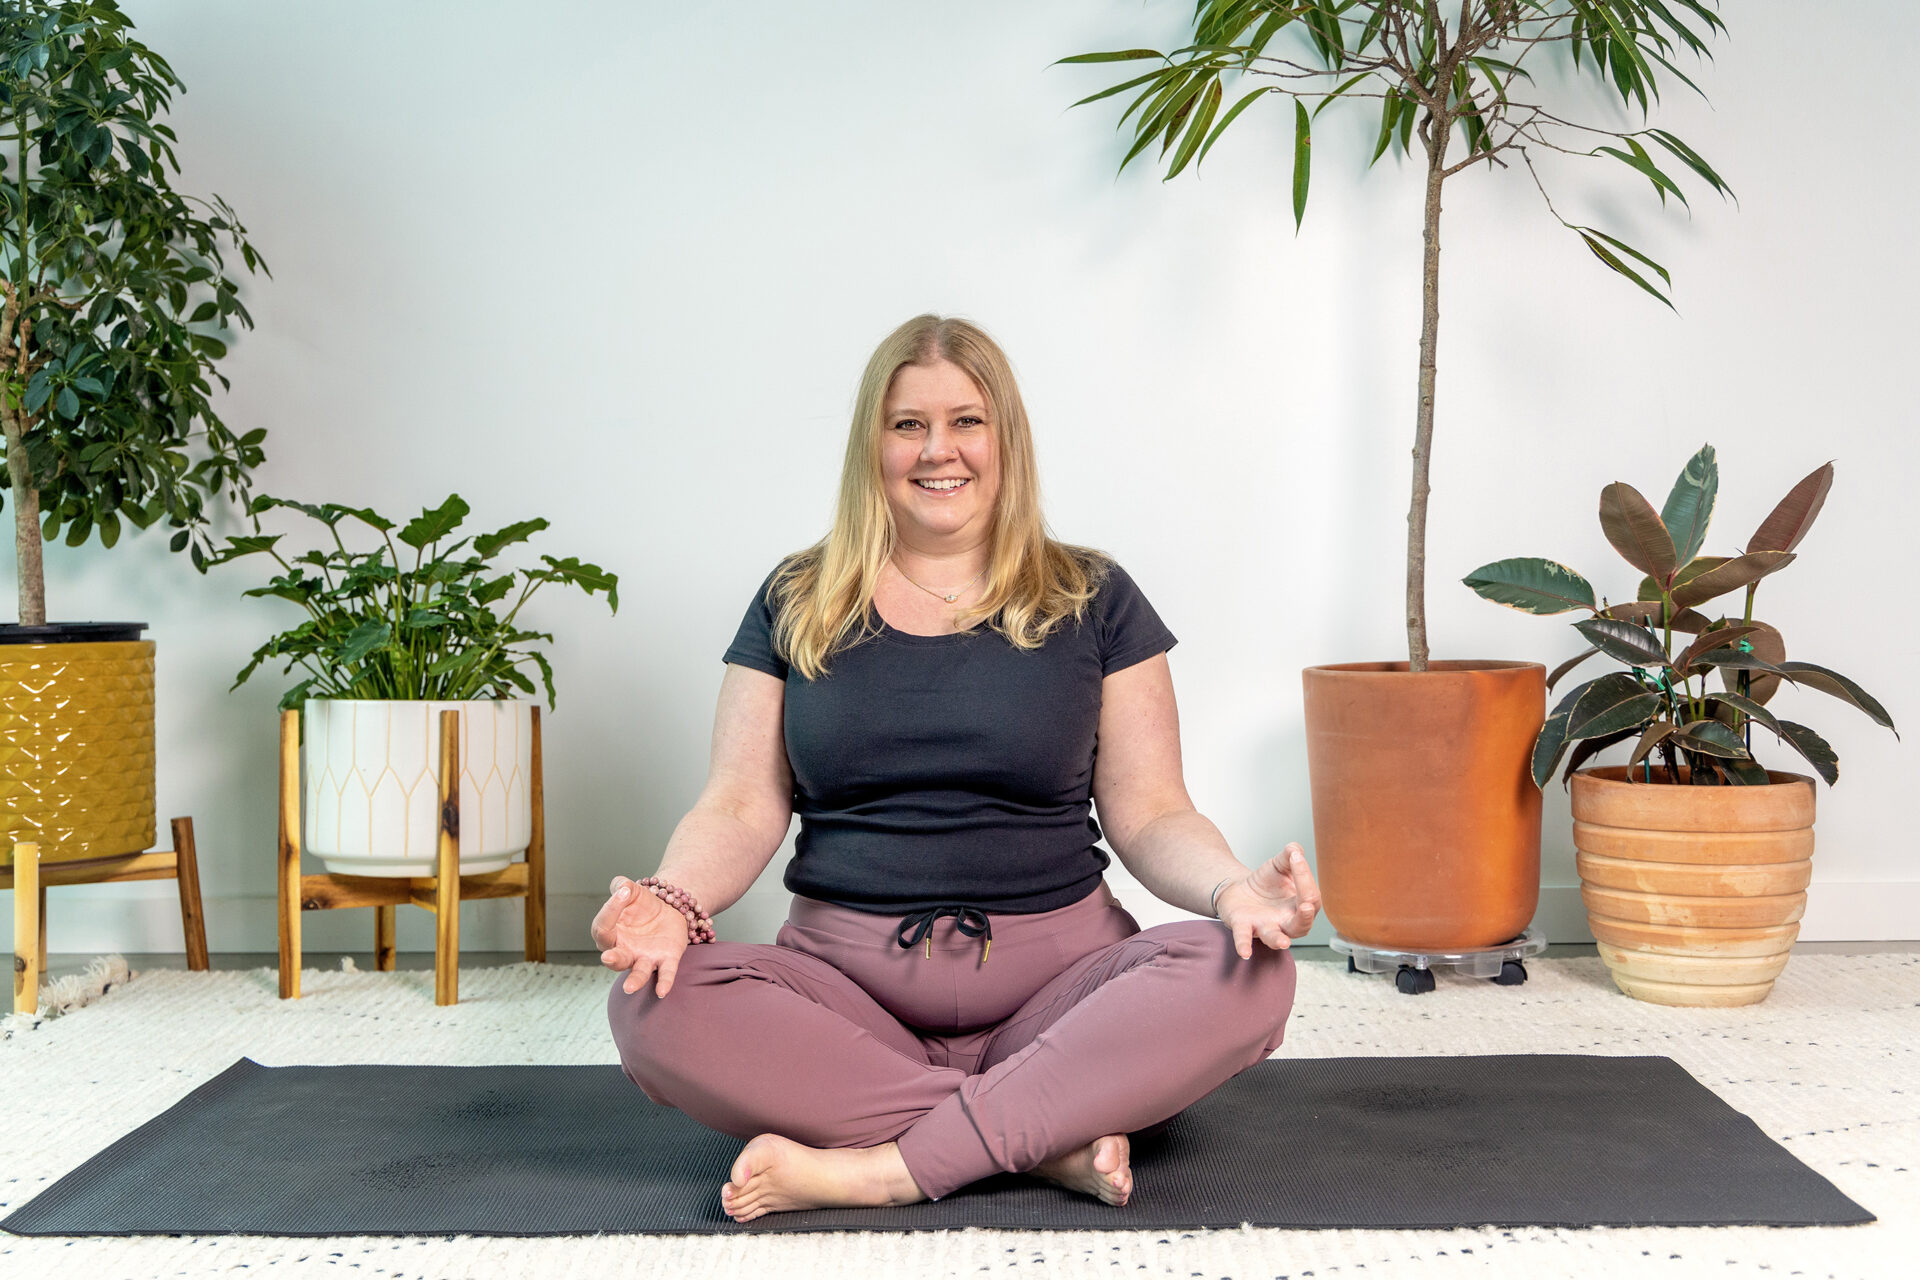 Yoga Instructor – Branding Photo Session